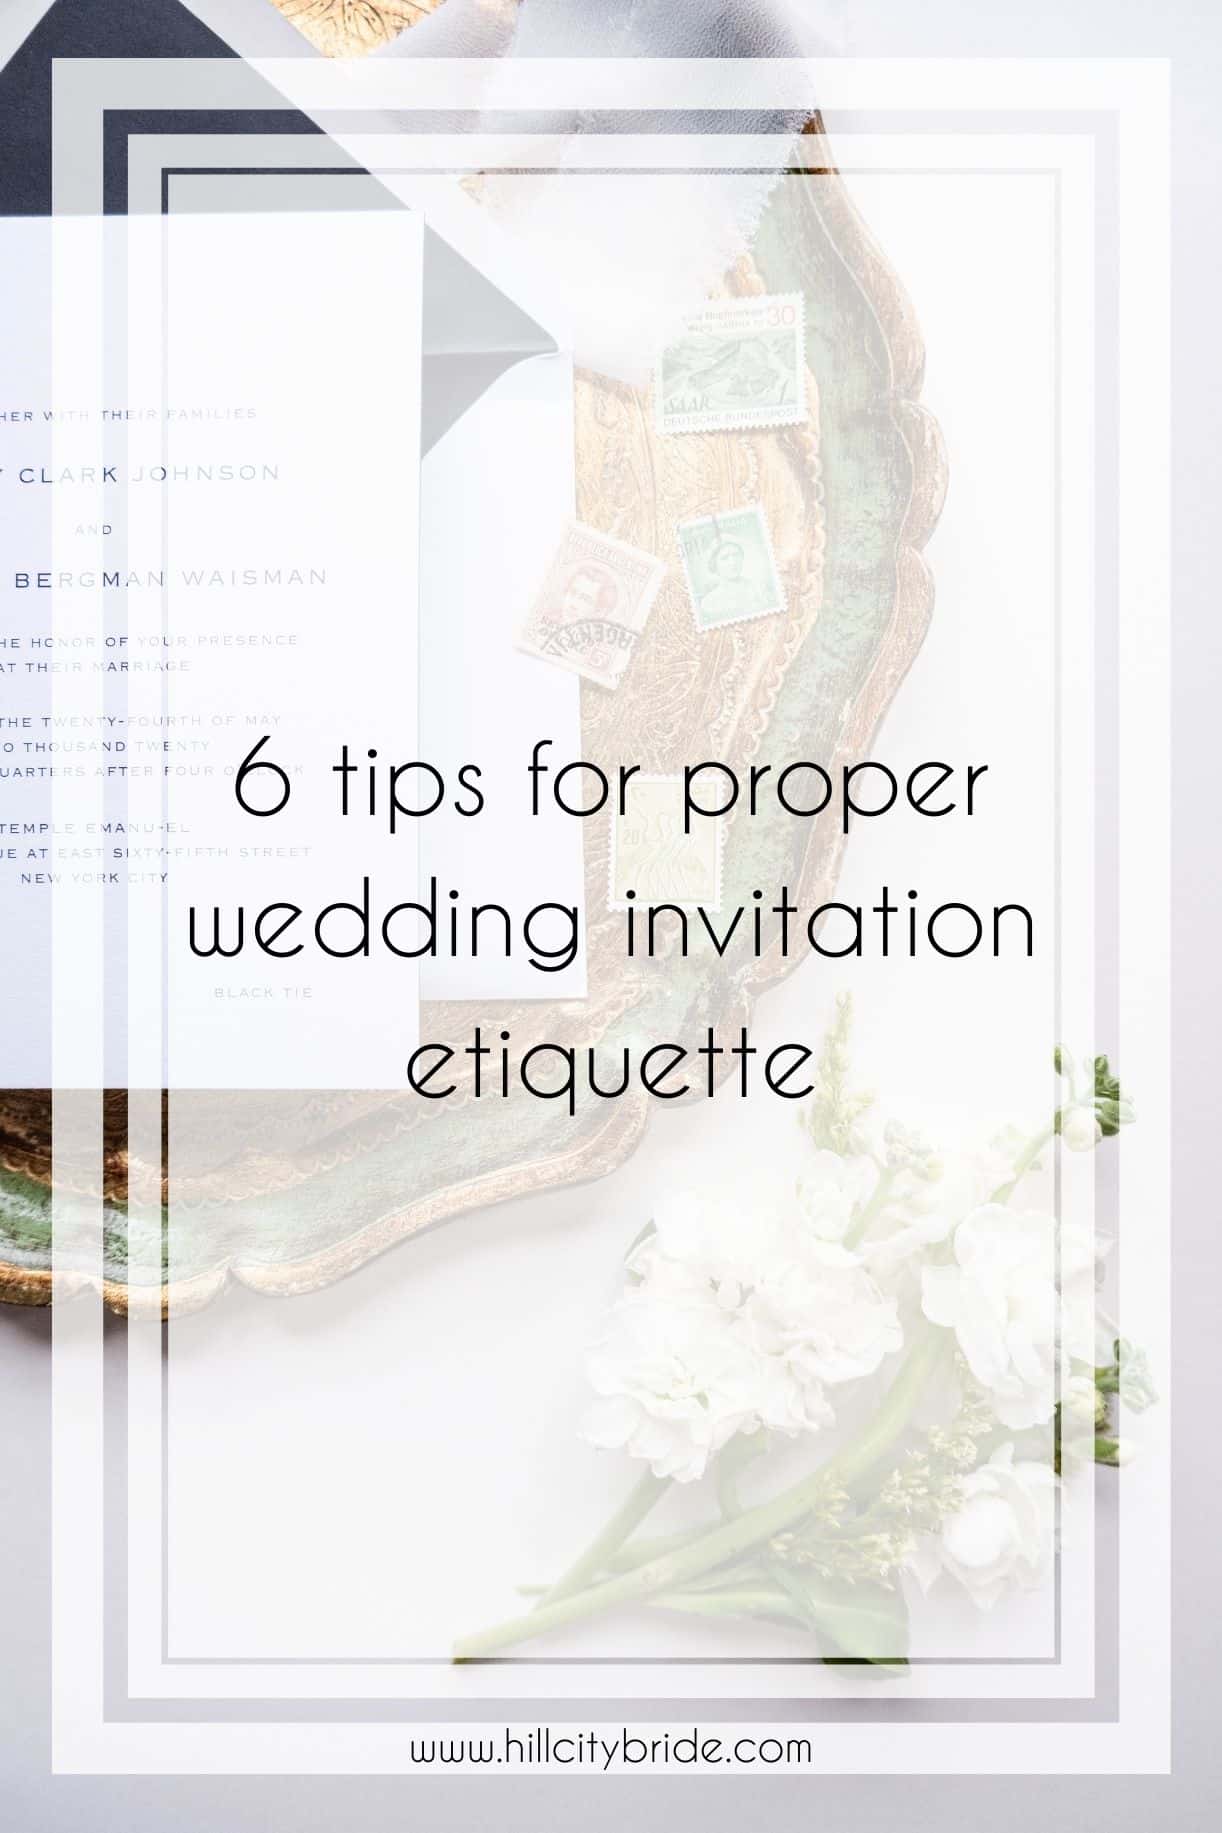 6 Simple Ways to Ensure You Have Proper Wedding Invitation Etiquette